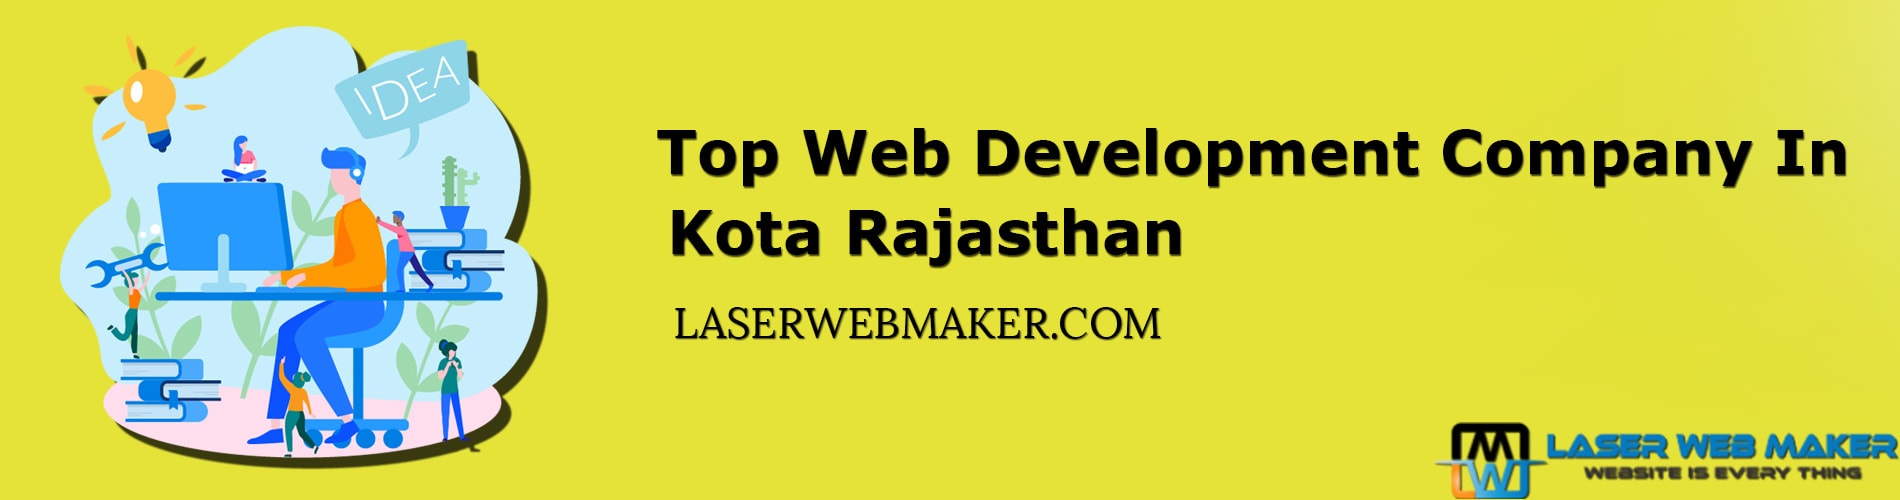 Top Web Development Company In Kota Rajasthan